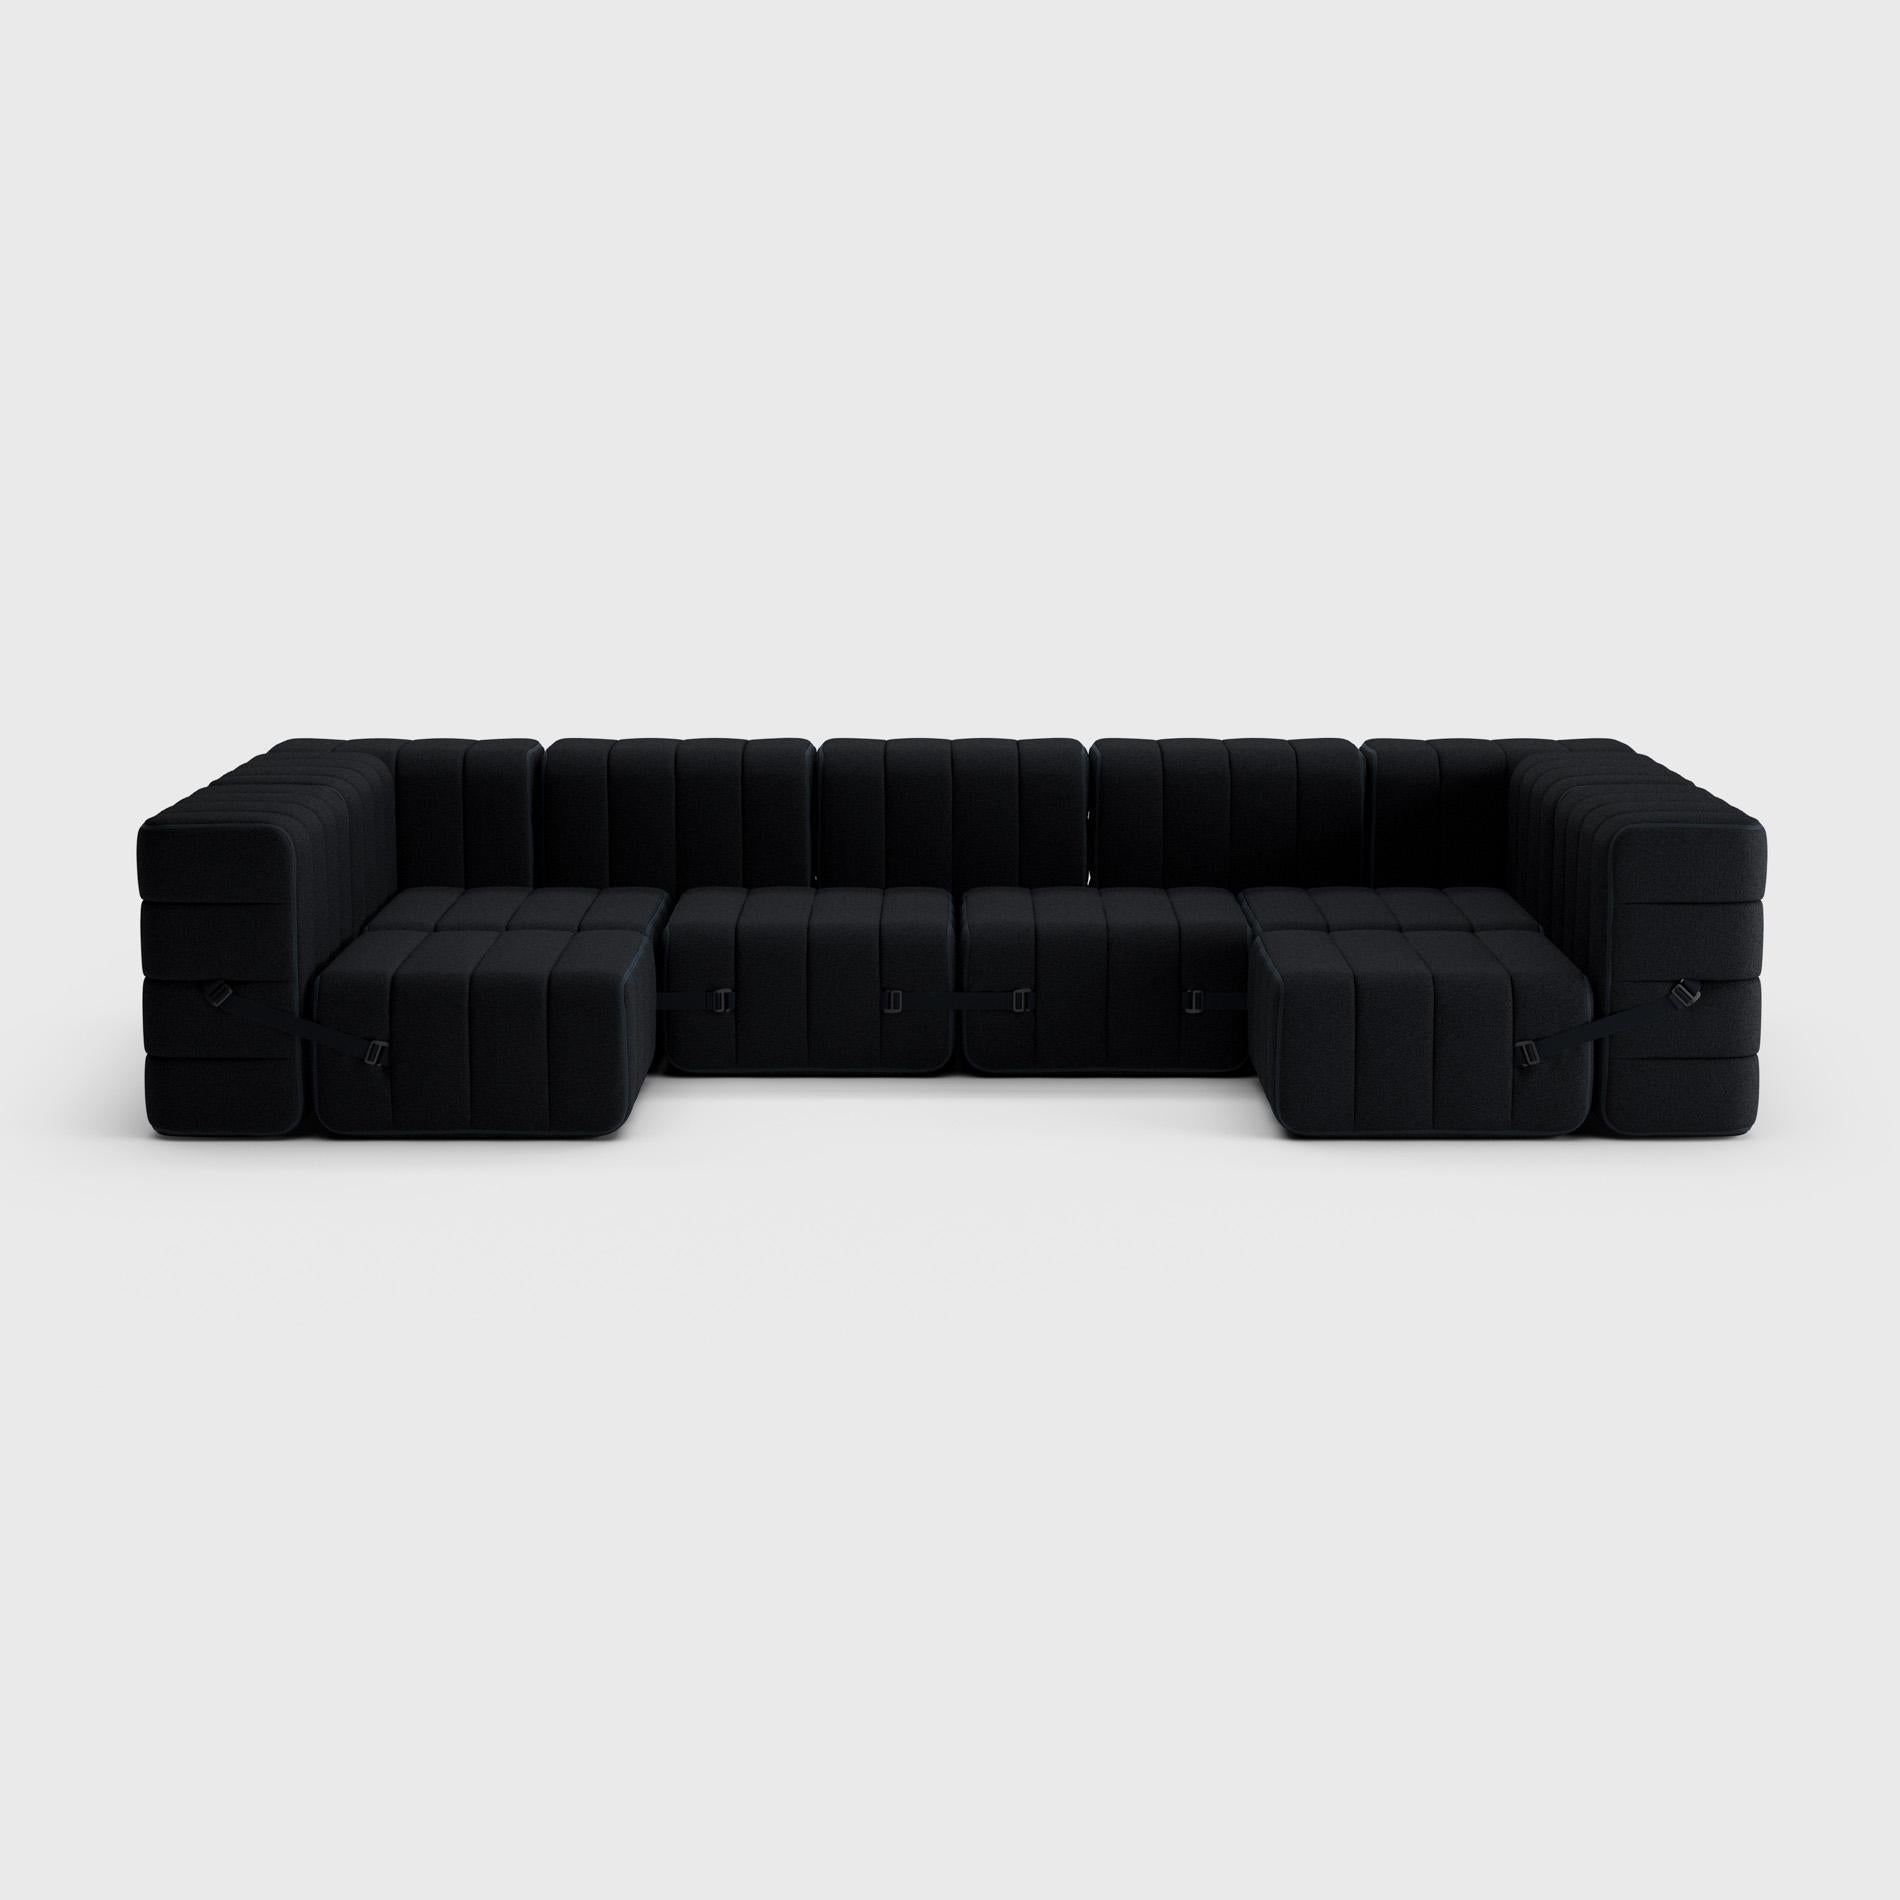 Curt Single Module, Fabric Sera 'Ebony Black', Curt Modular Sofa System In New Condition For Sale In Berlin, BE